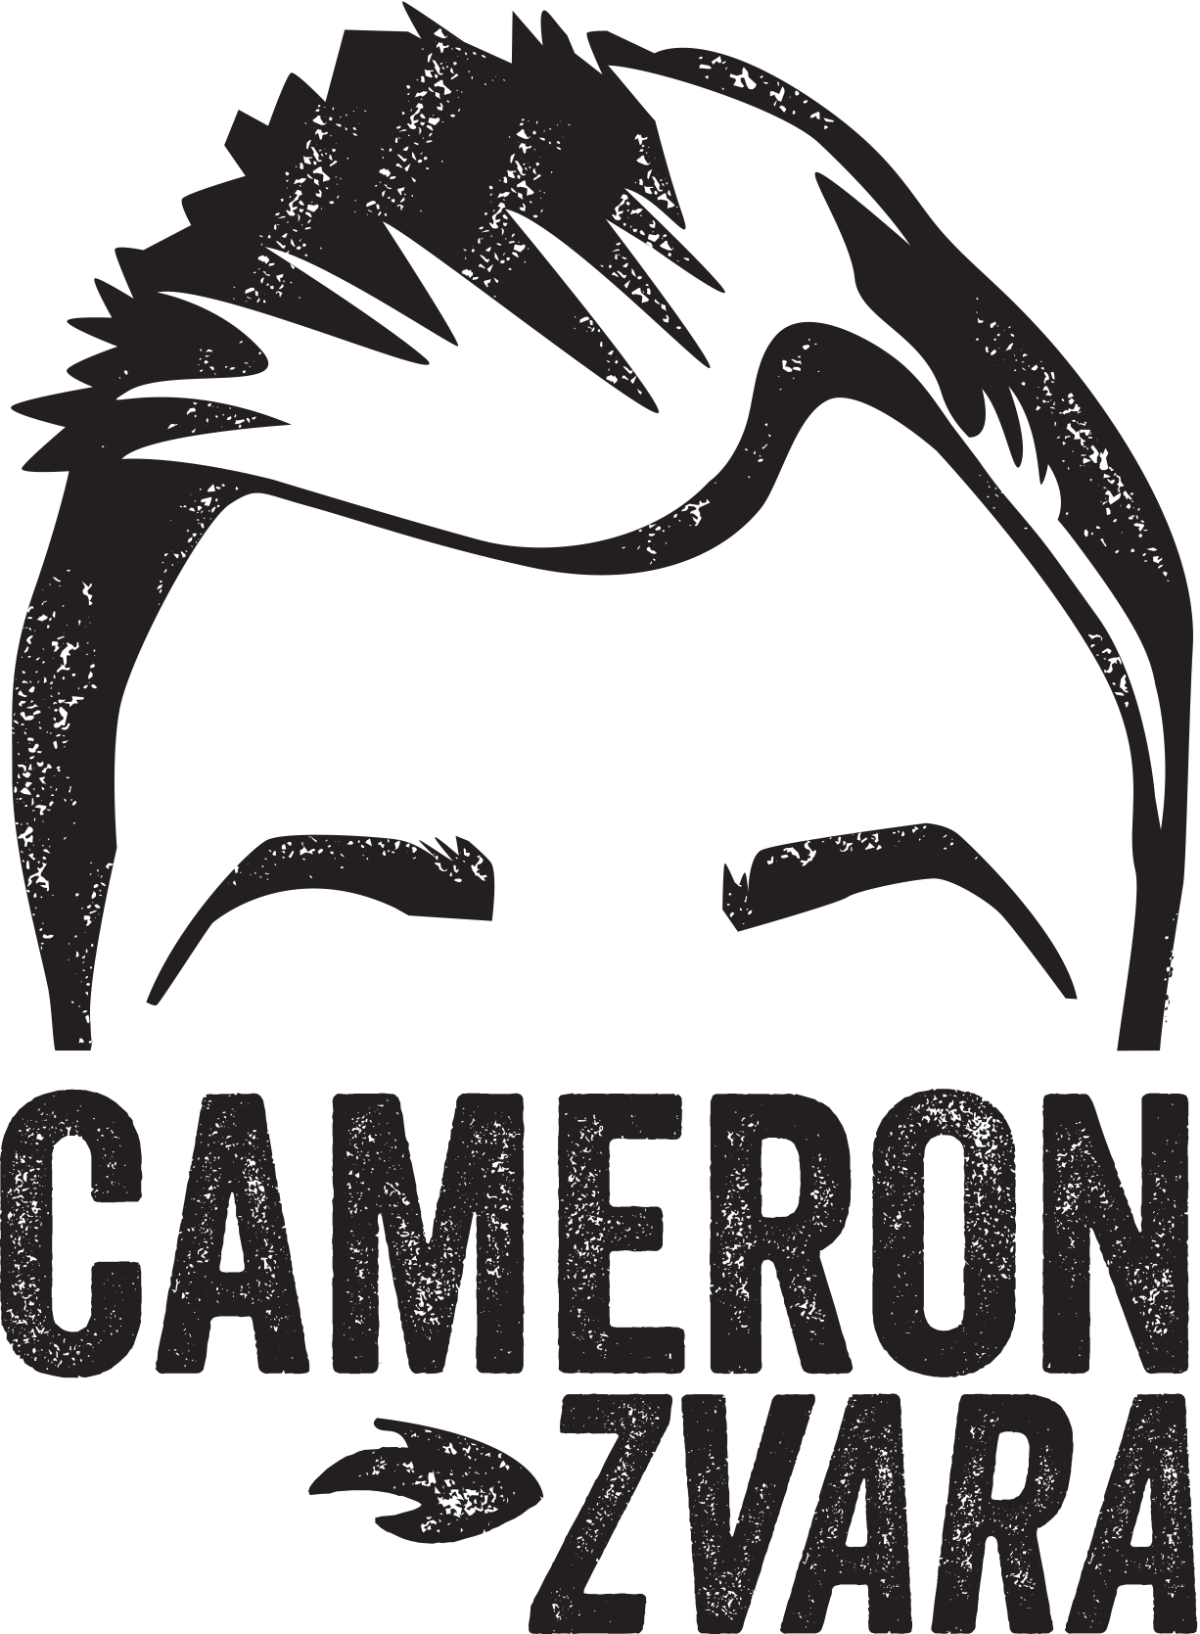 Cameron Zvara_Name and logo